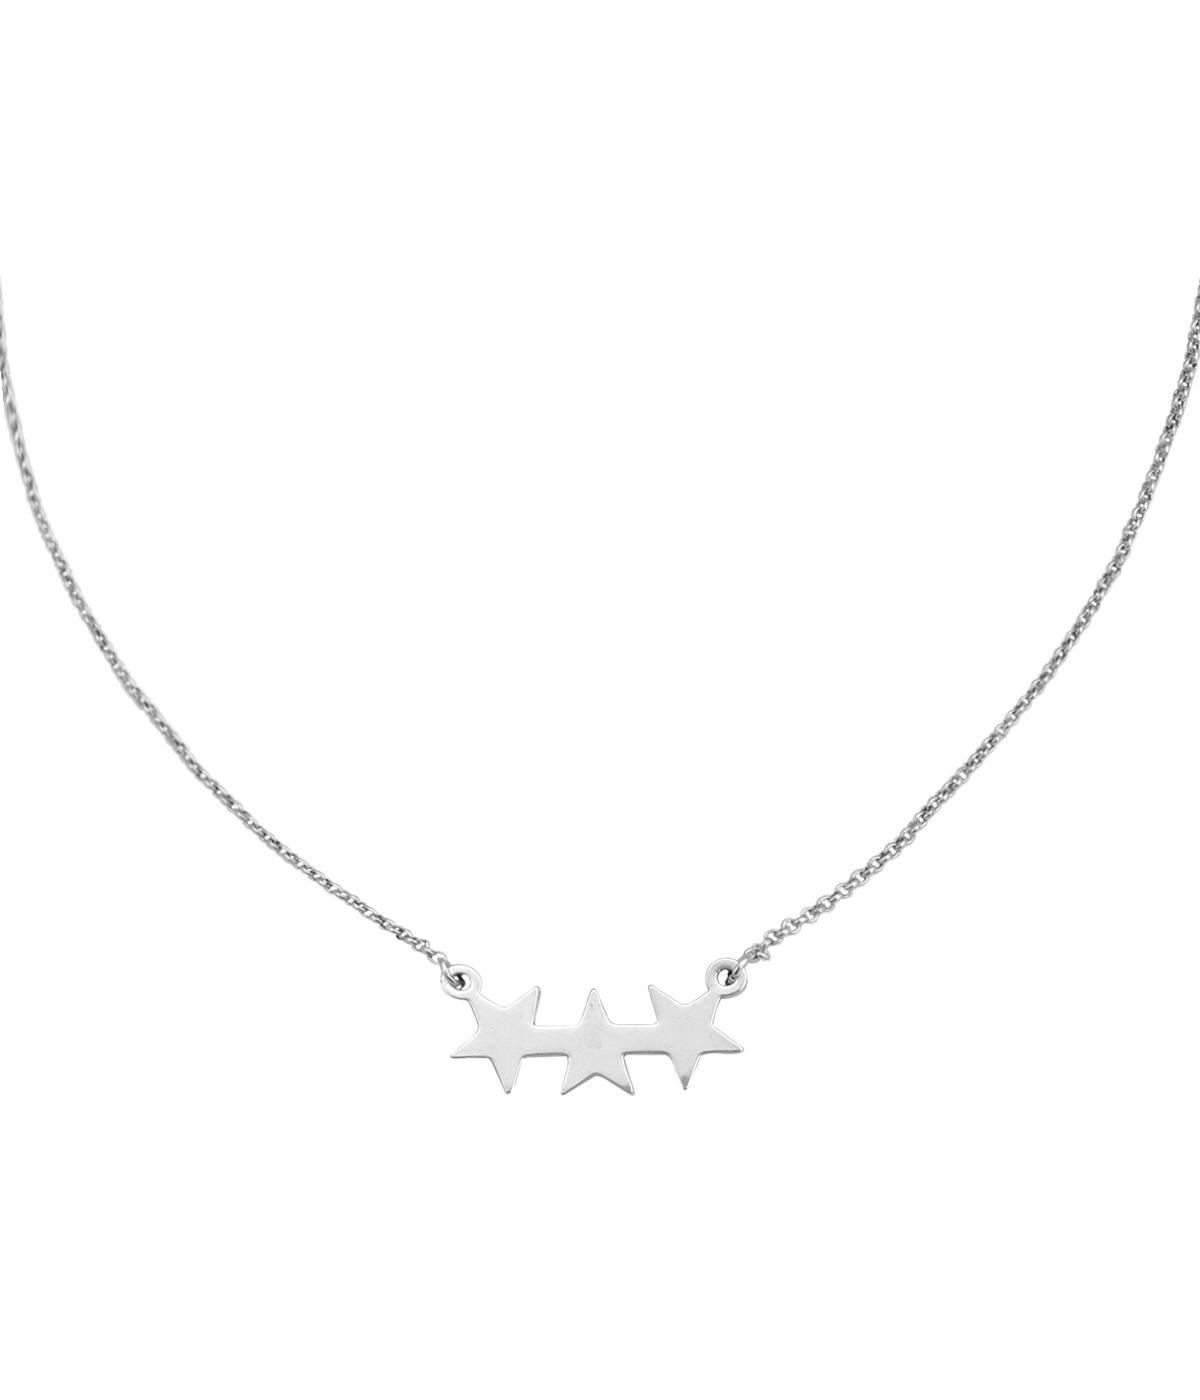 Hestness Anne Lise | 3 stars necklace -latest NECKLACE,Pendant Necklaces design 2021